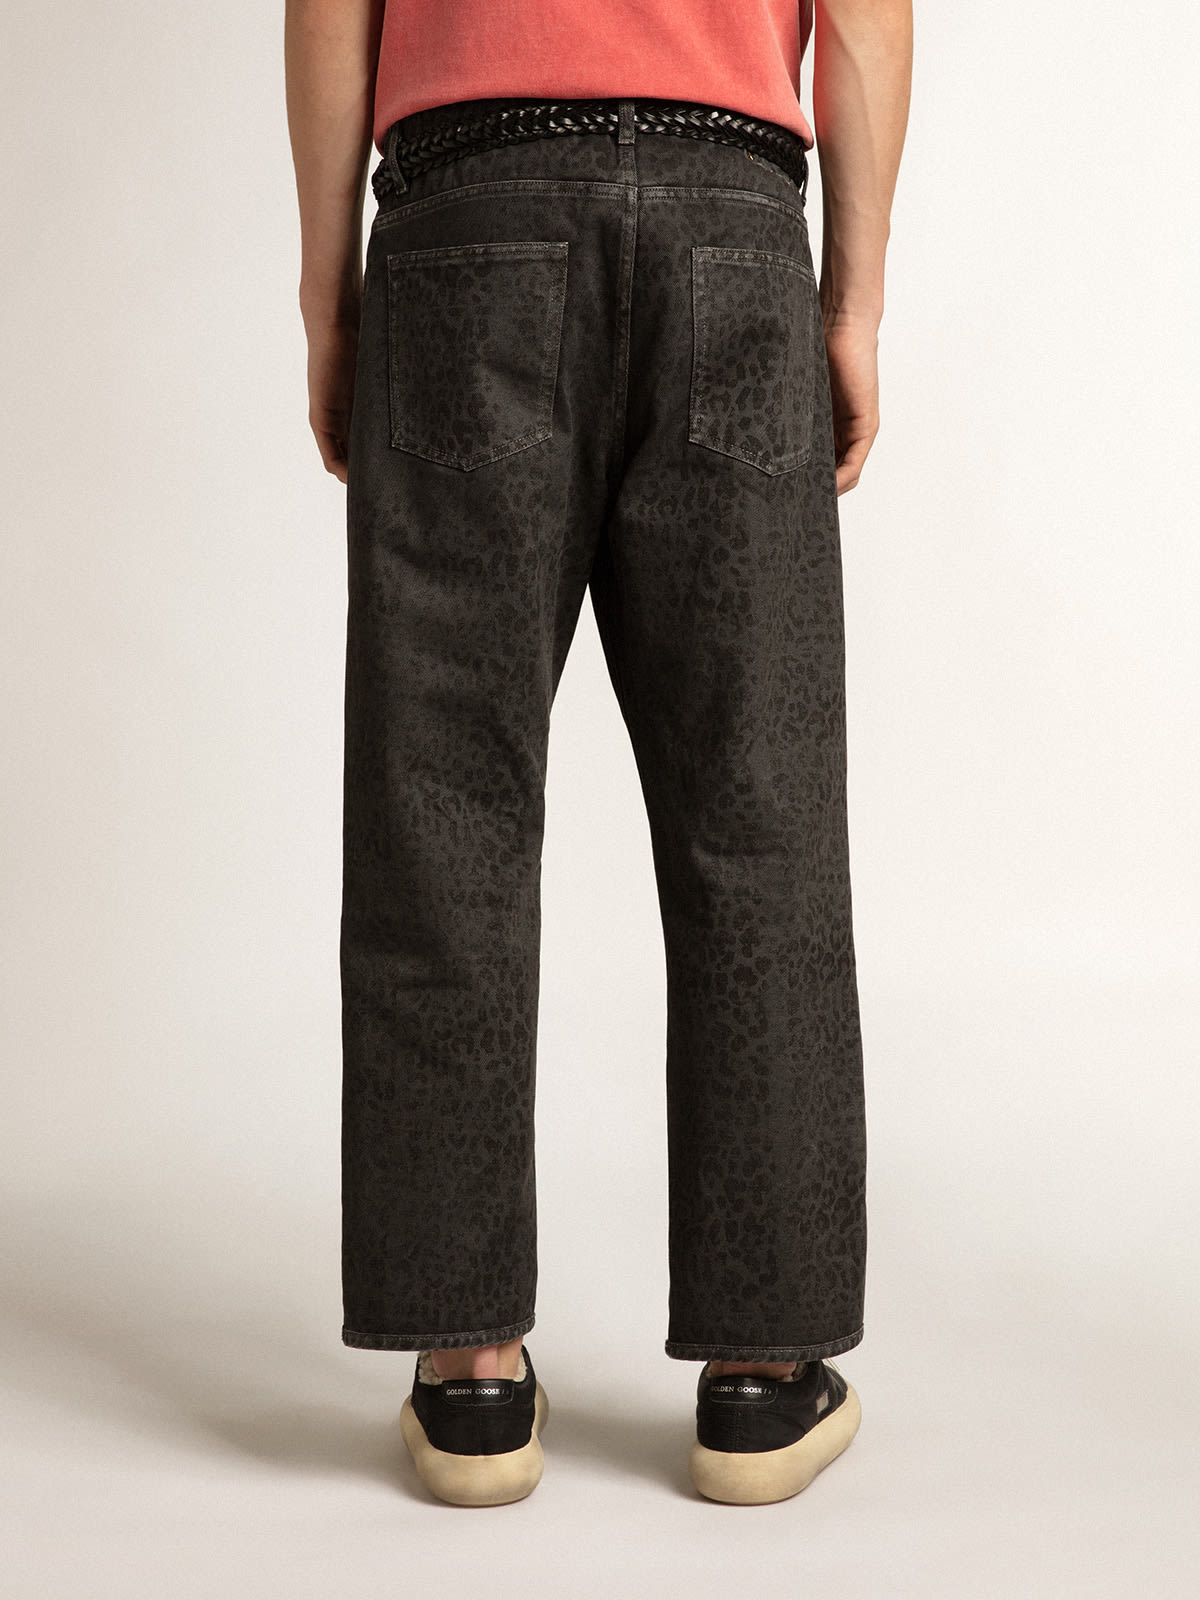 Golden Goose - Men’s gray jeans with leopard print in 